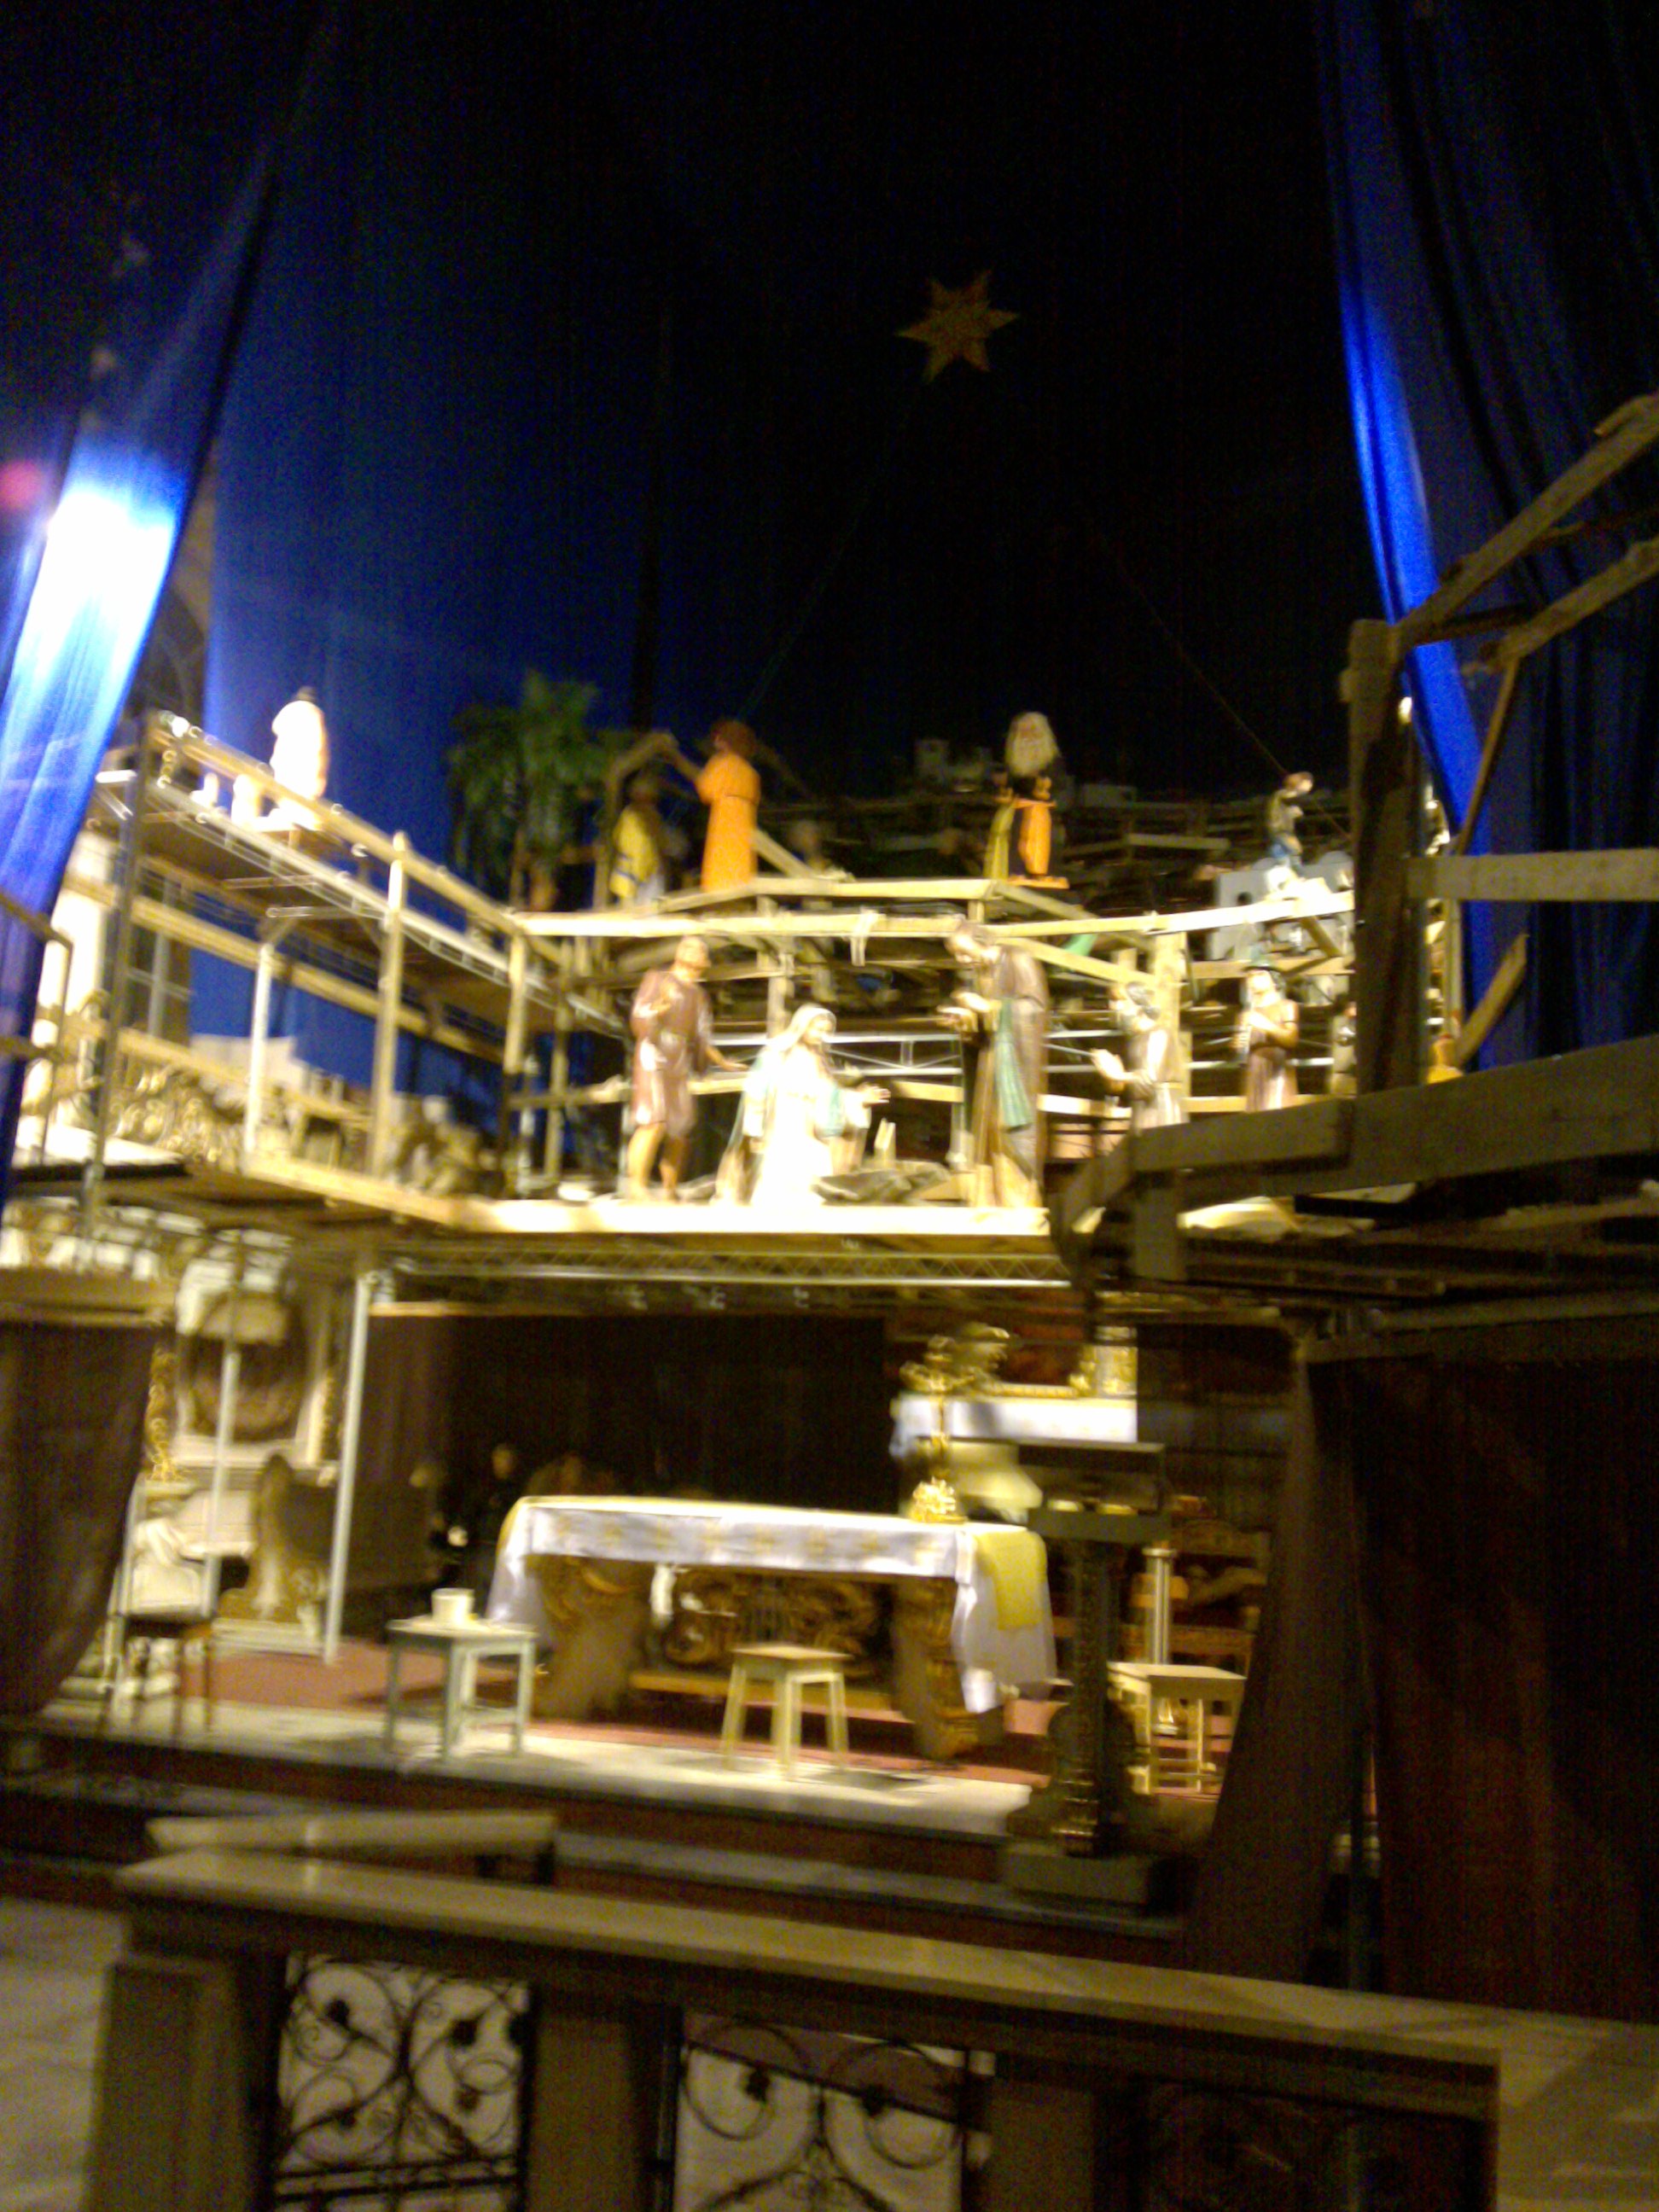 Nativity scene on a grand scale